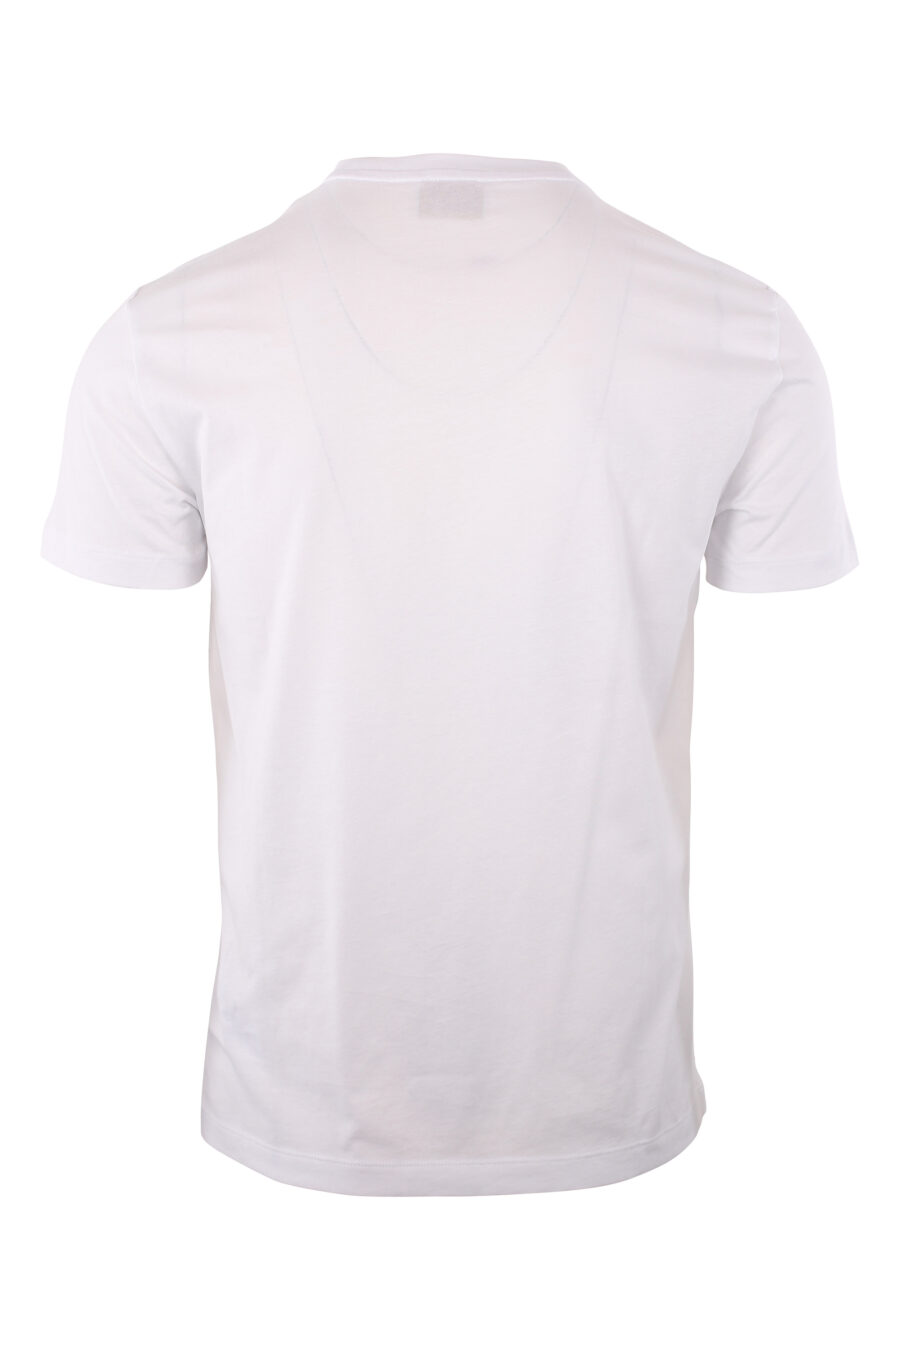 Weißes T-Shirt mit goldenem Maxilogo "lux identity" - IMG 2004